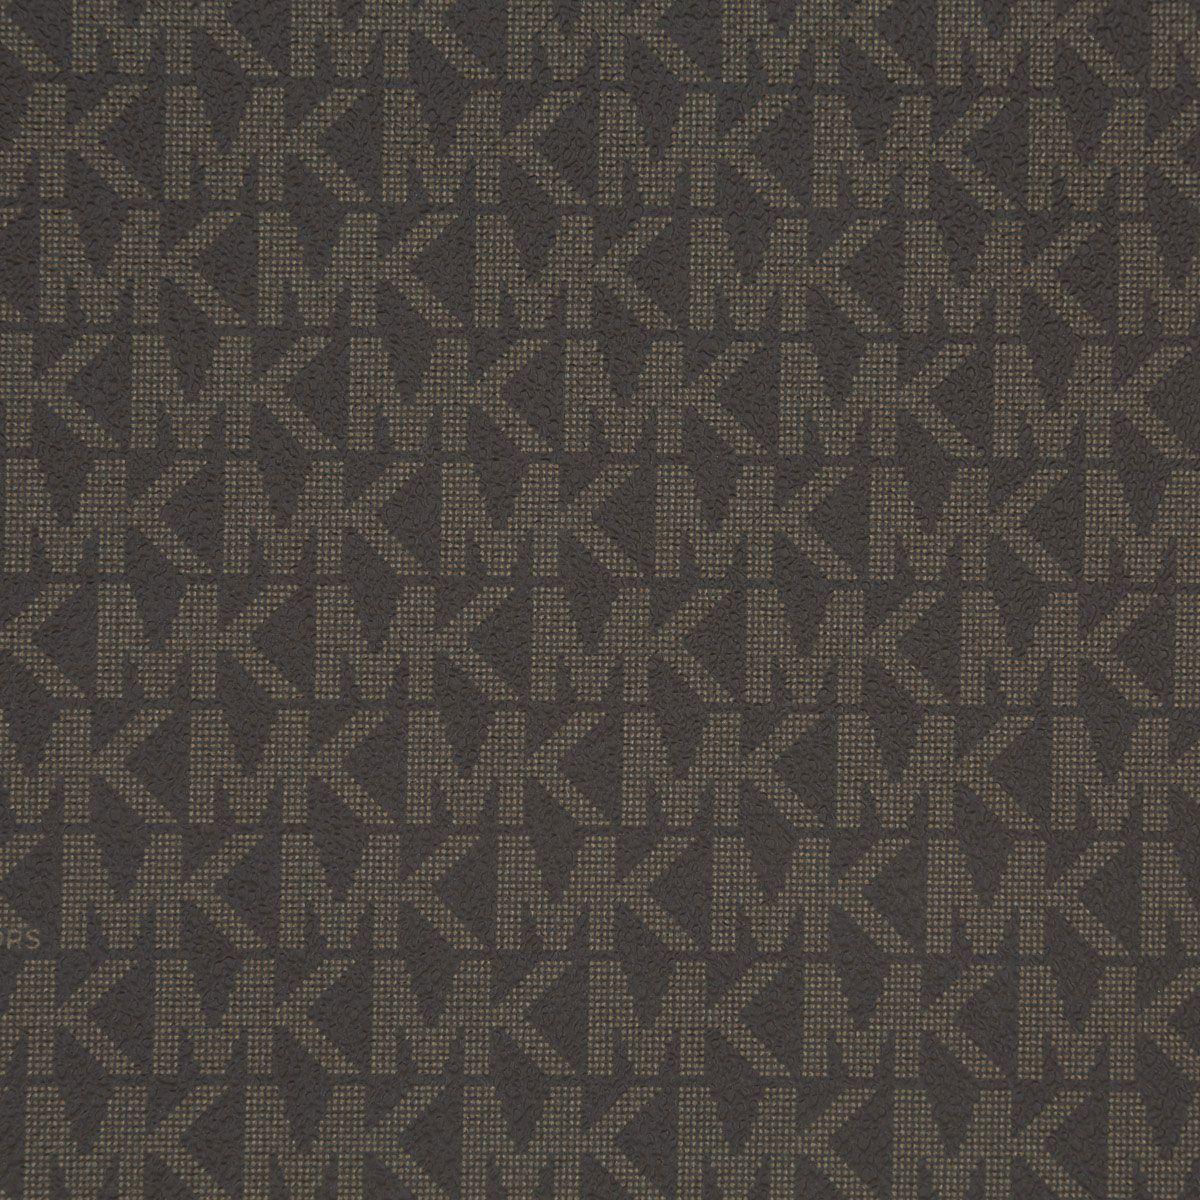 Michael Kors Logo wallpaper by jamesluce2 - Download on ZEDGE™